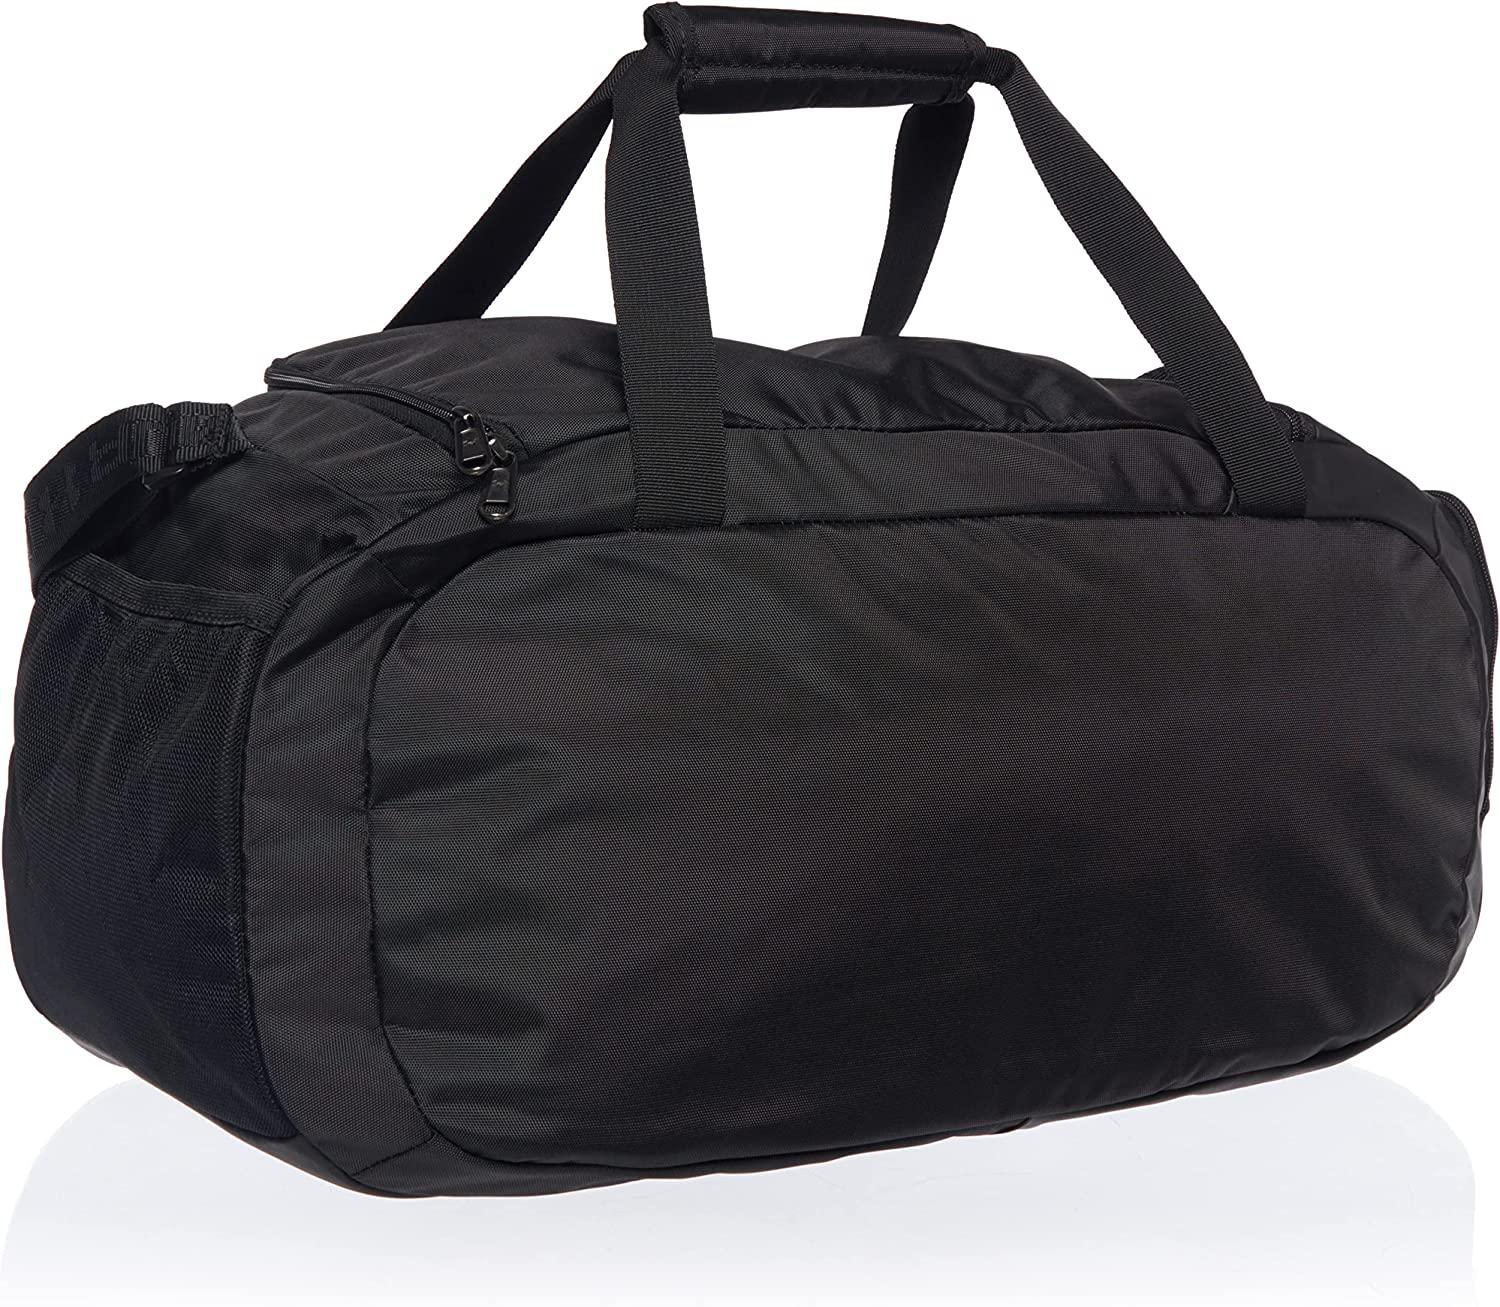 Hyland's Powered on X: An under-the-radar gym bag necessity! PRID